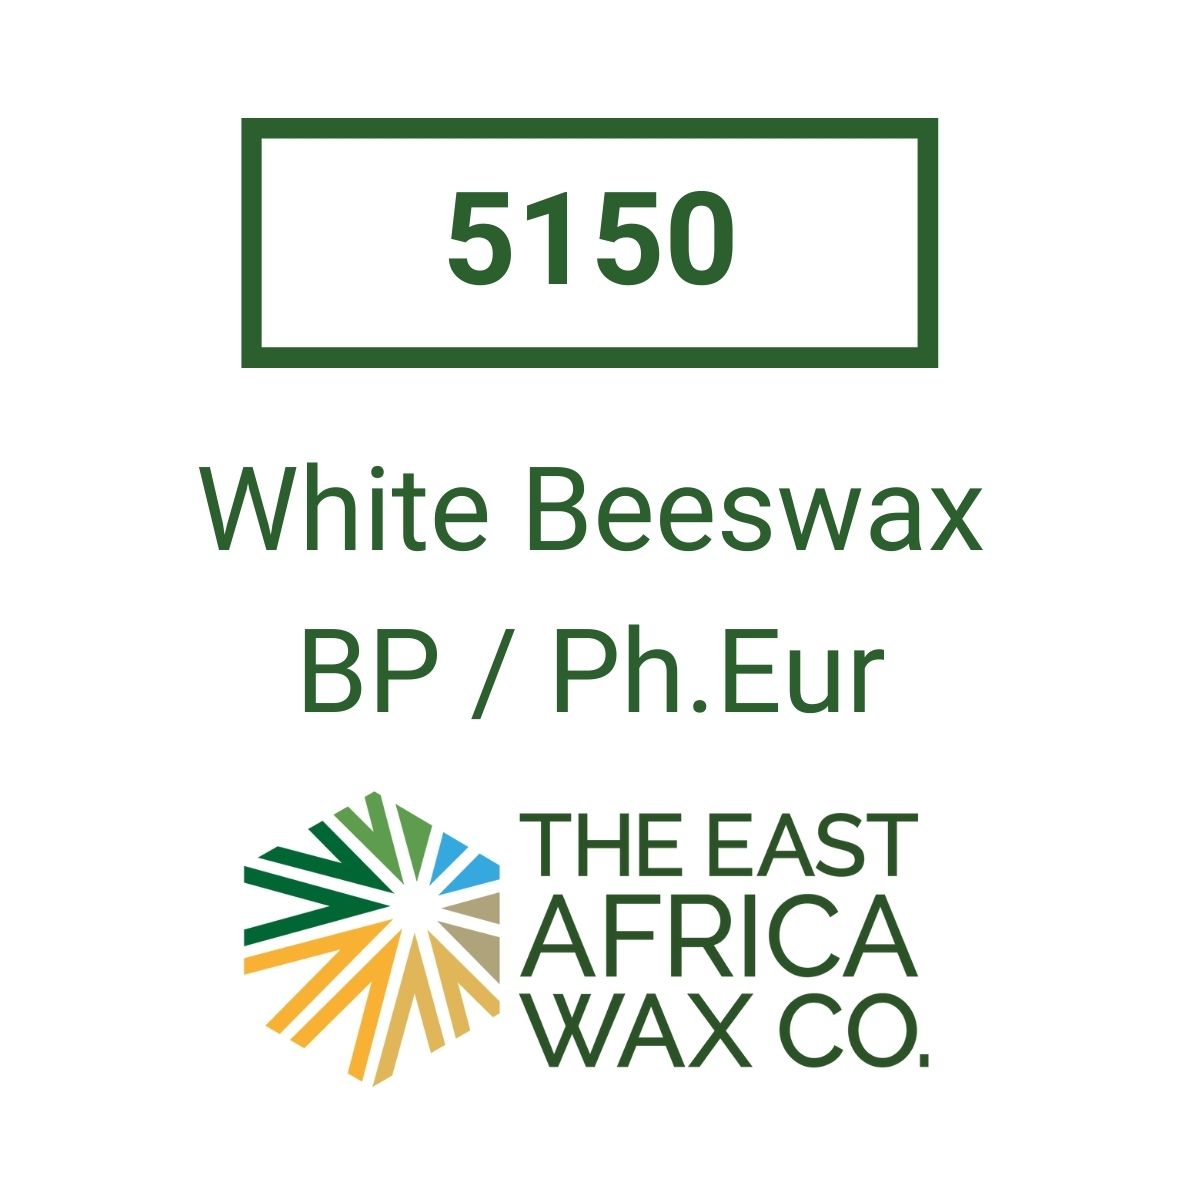 White Beeswax - pharmaceutical grade BP/Ph.Eur